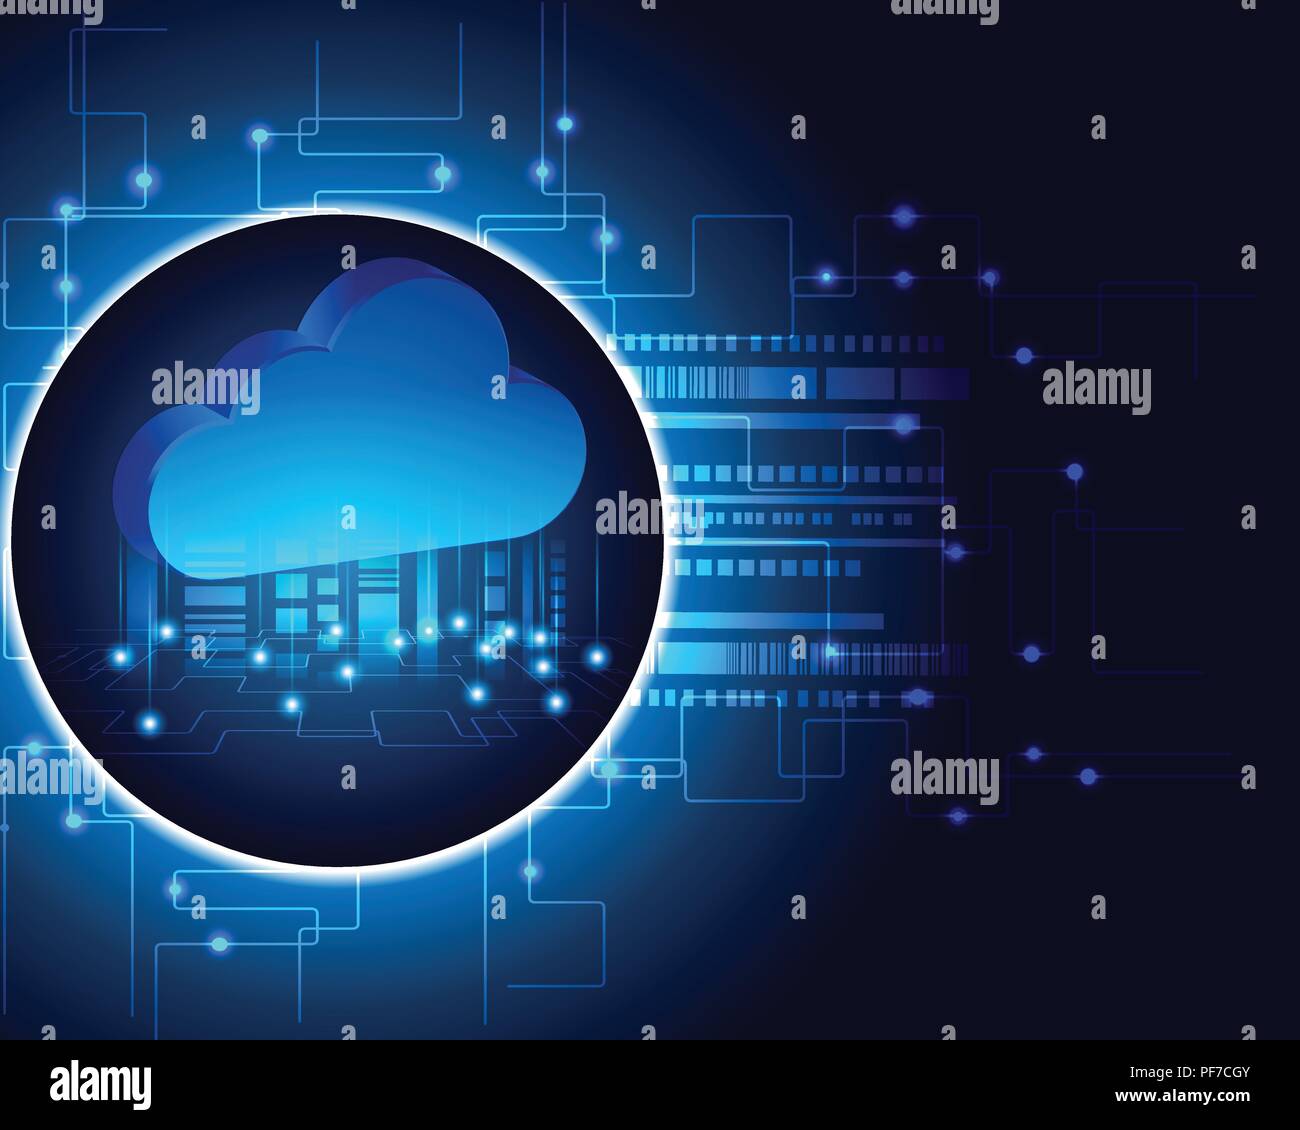 Cloud computing business Transaction data storage technology concept. vector illustration eps10. Stock Vector